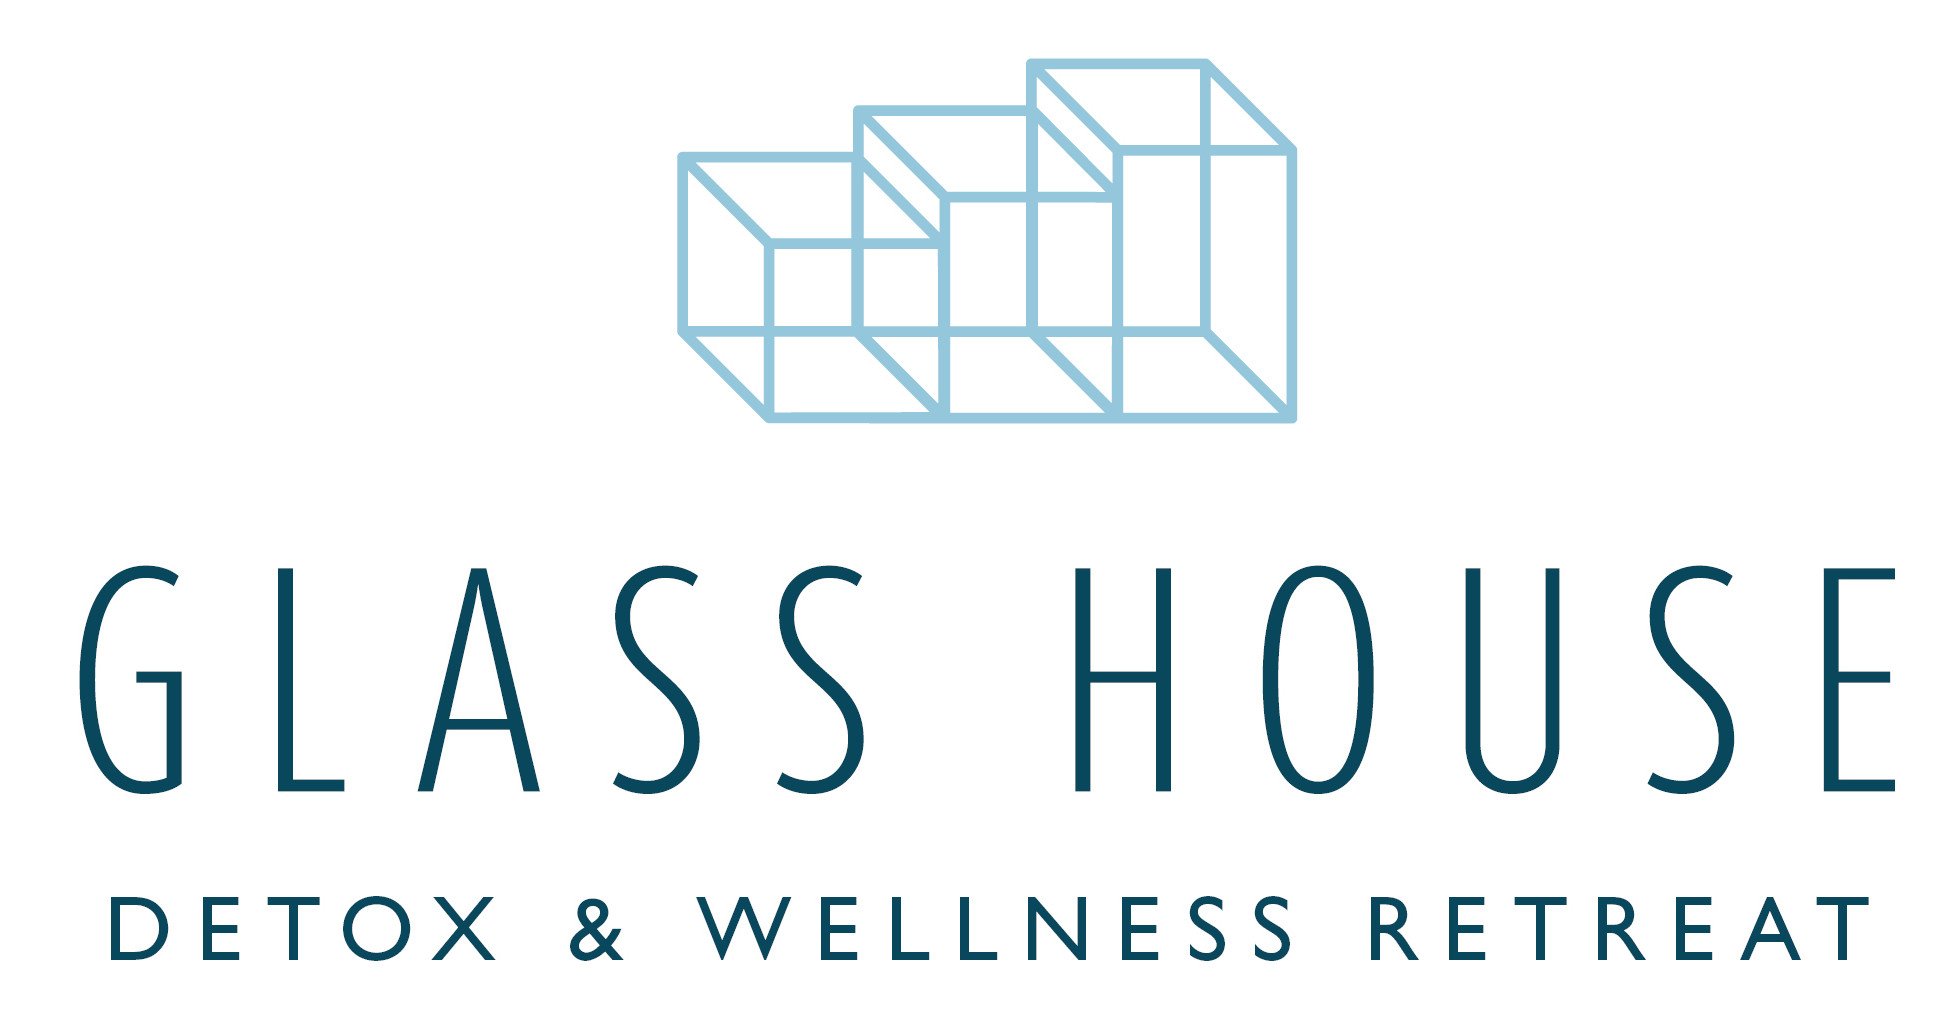 Glass House Retreat